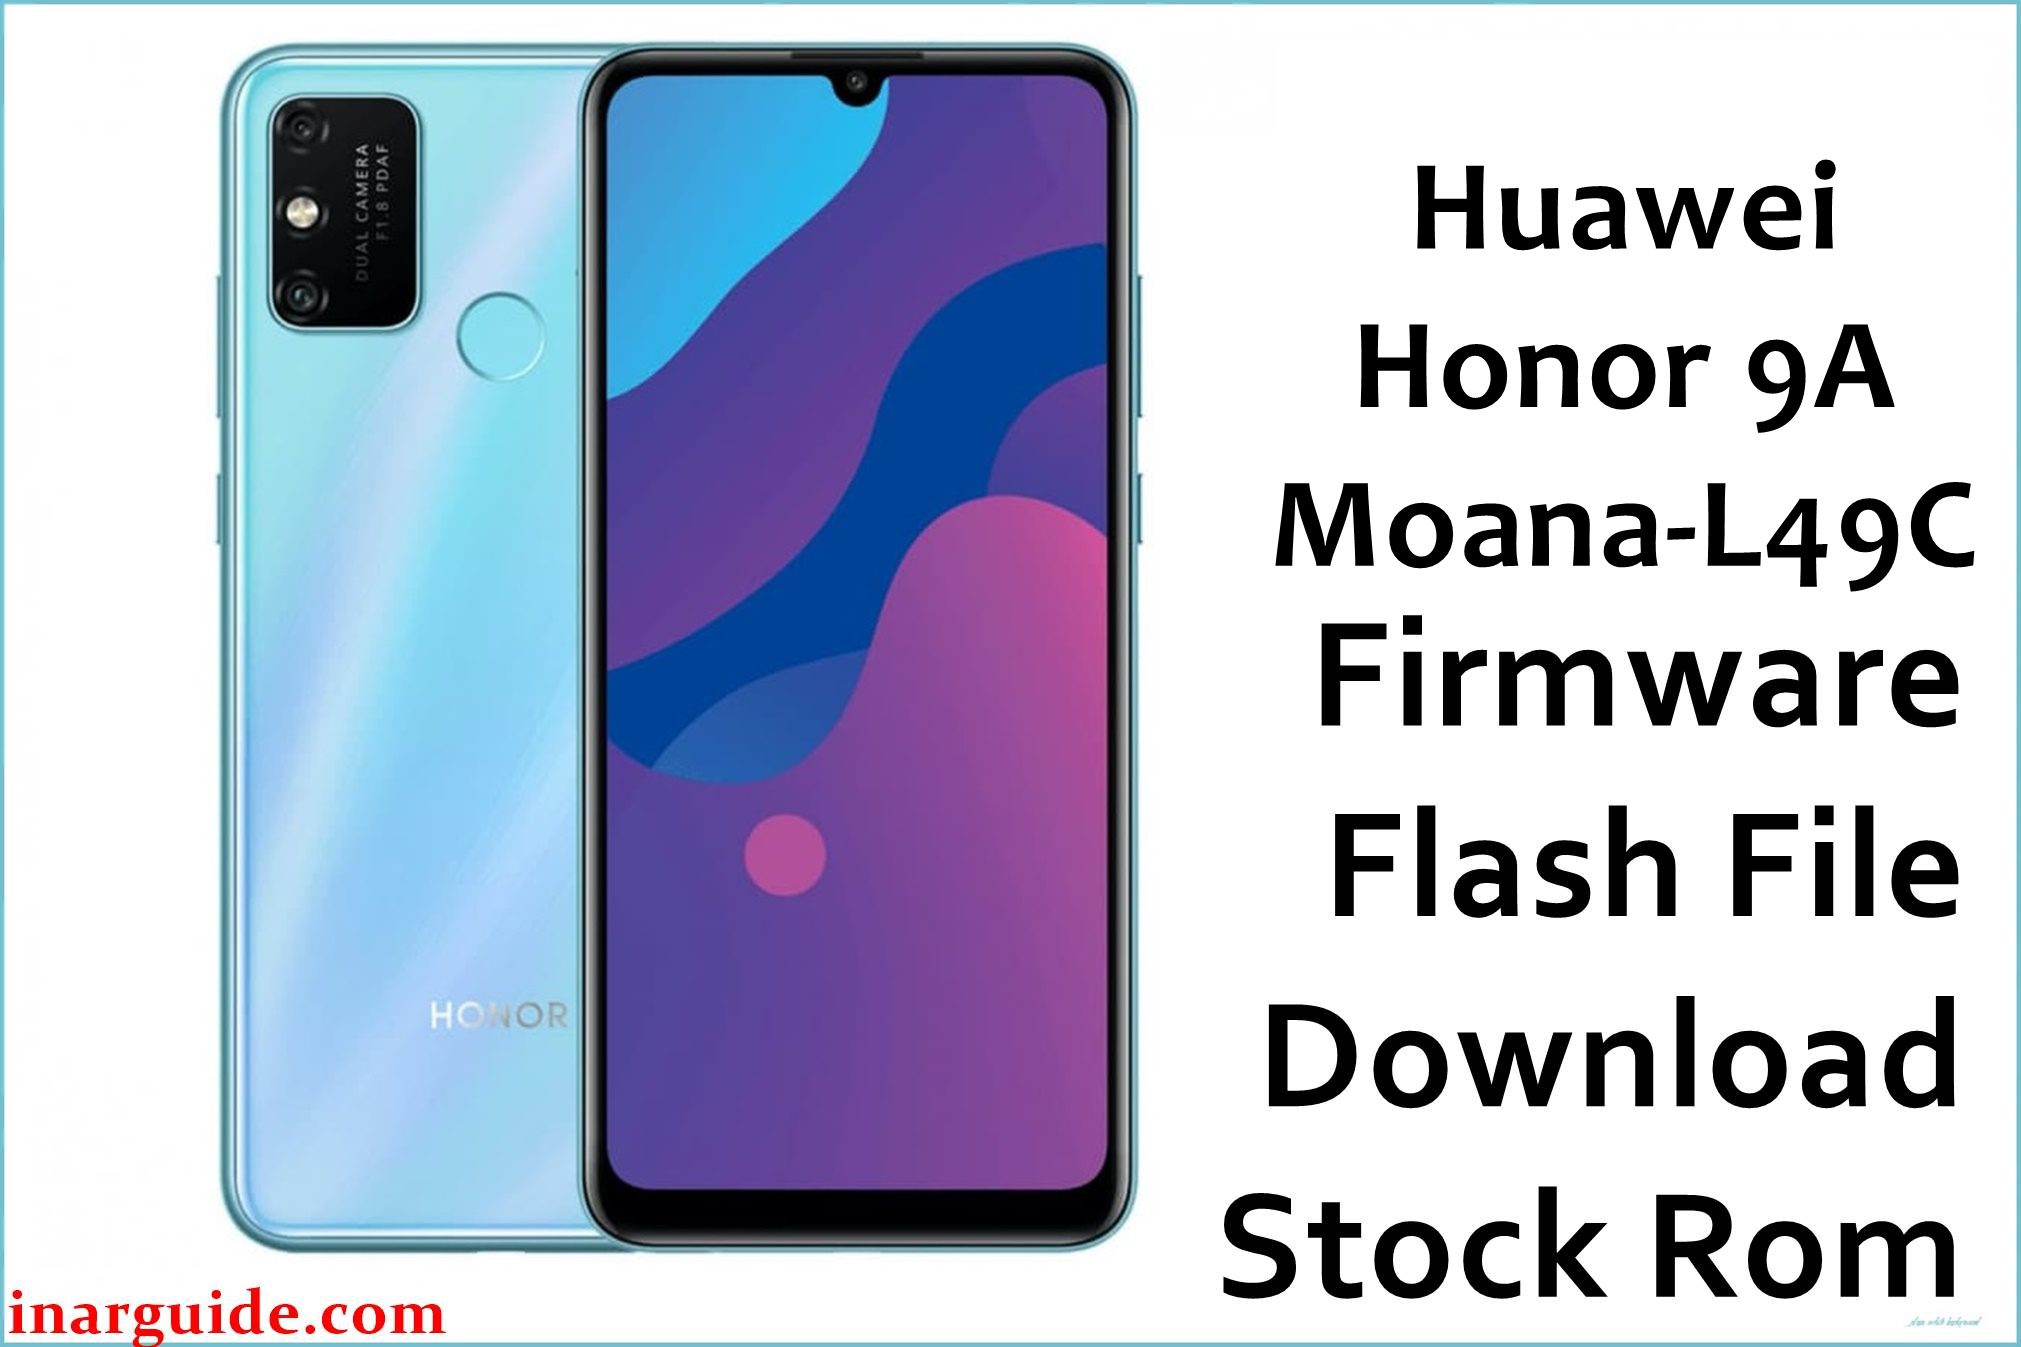 Huawei Honor 9A Moana L49C